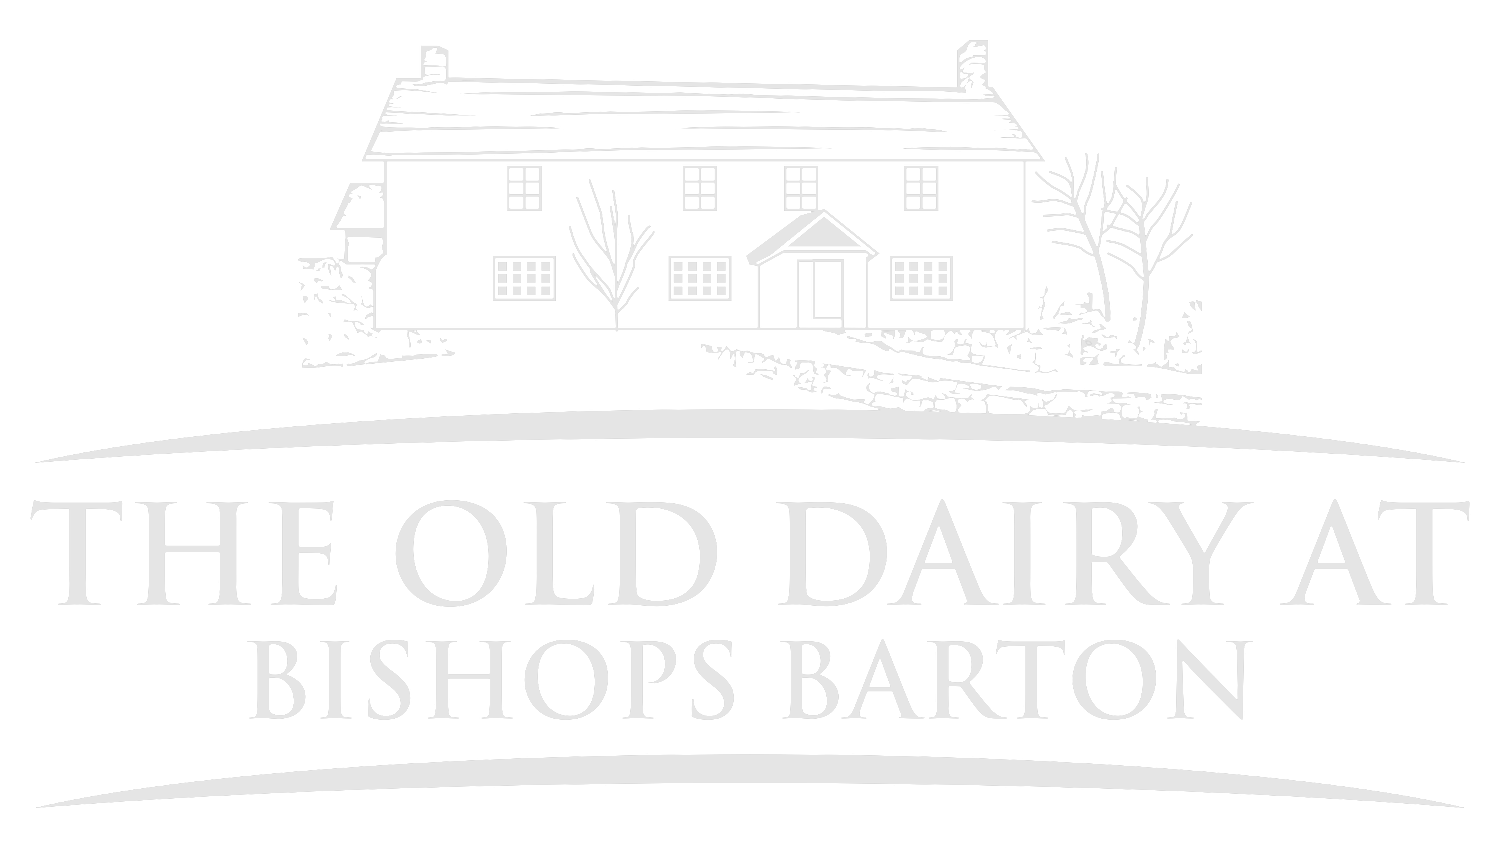 The Old Dairy at Bishops Barton